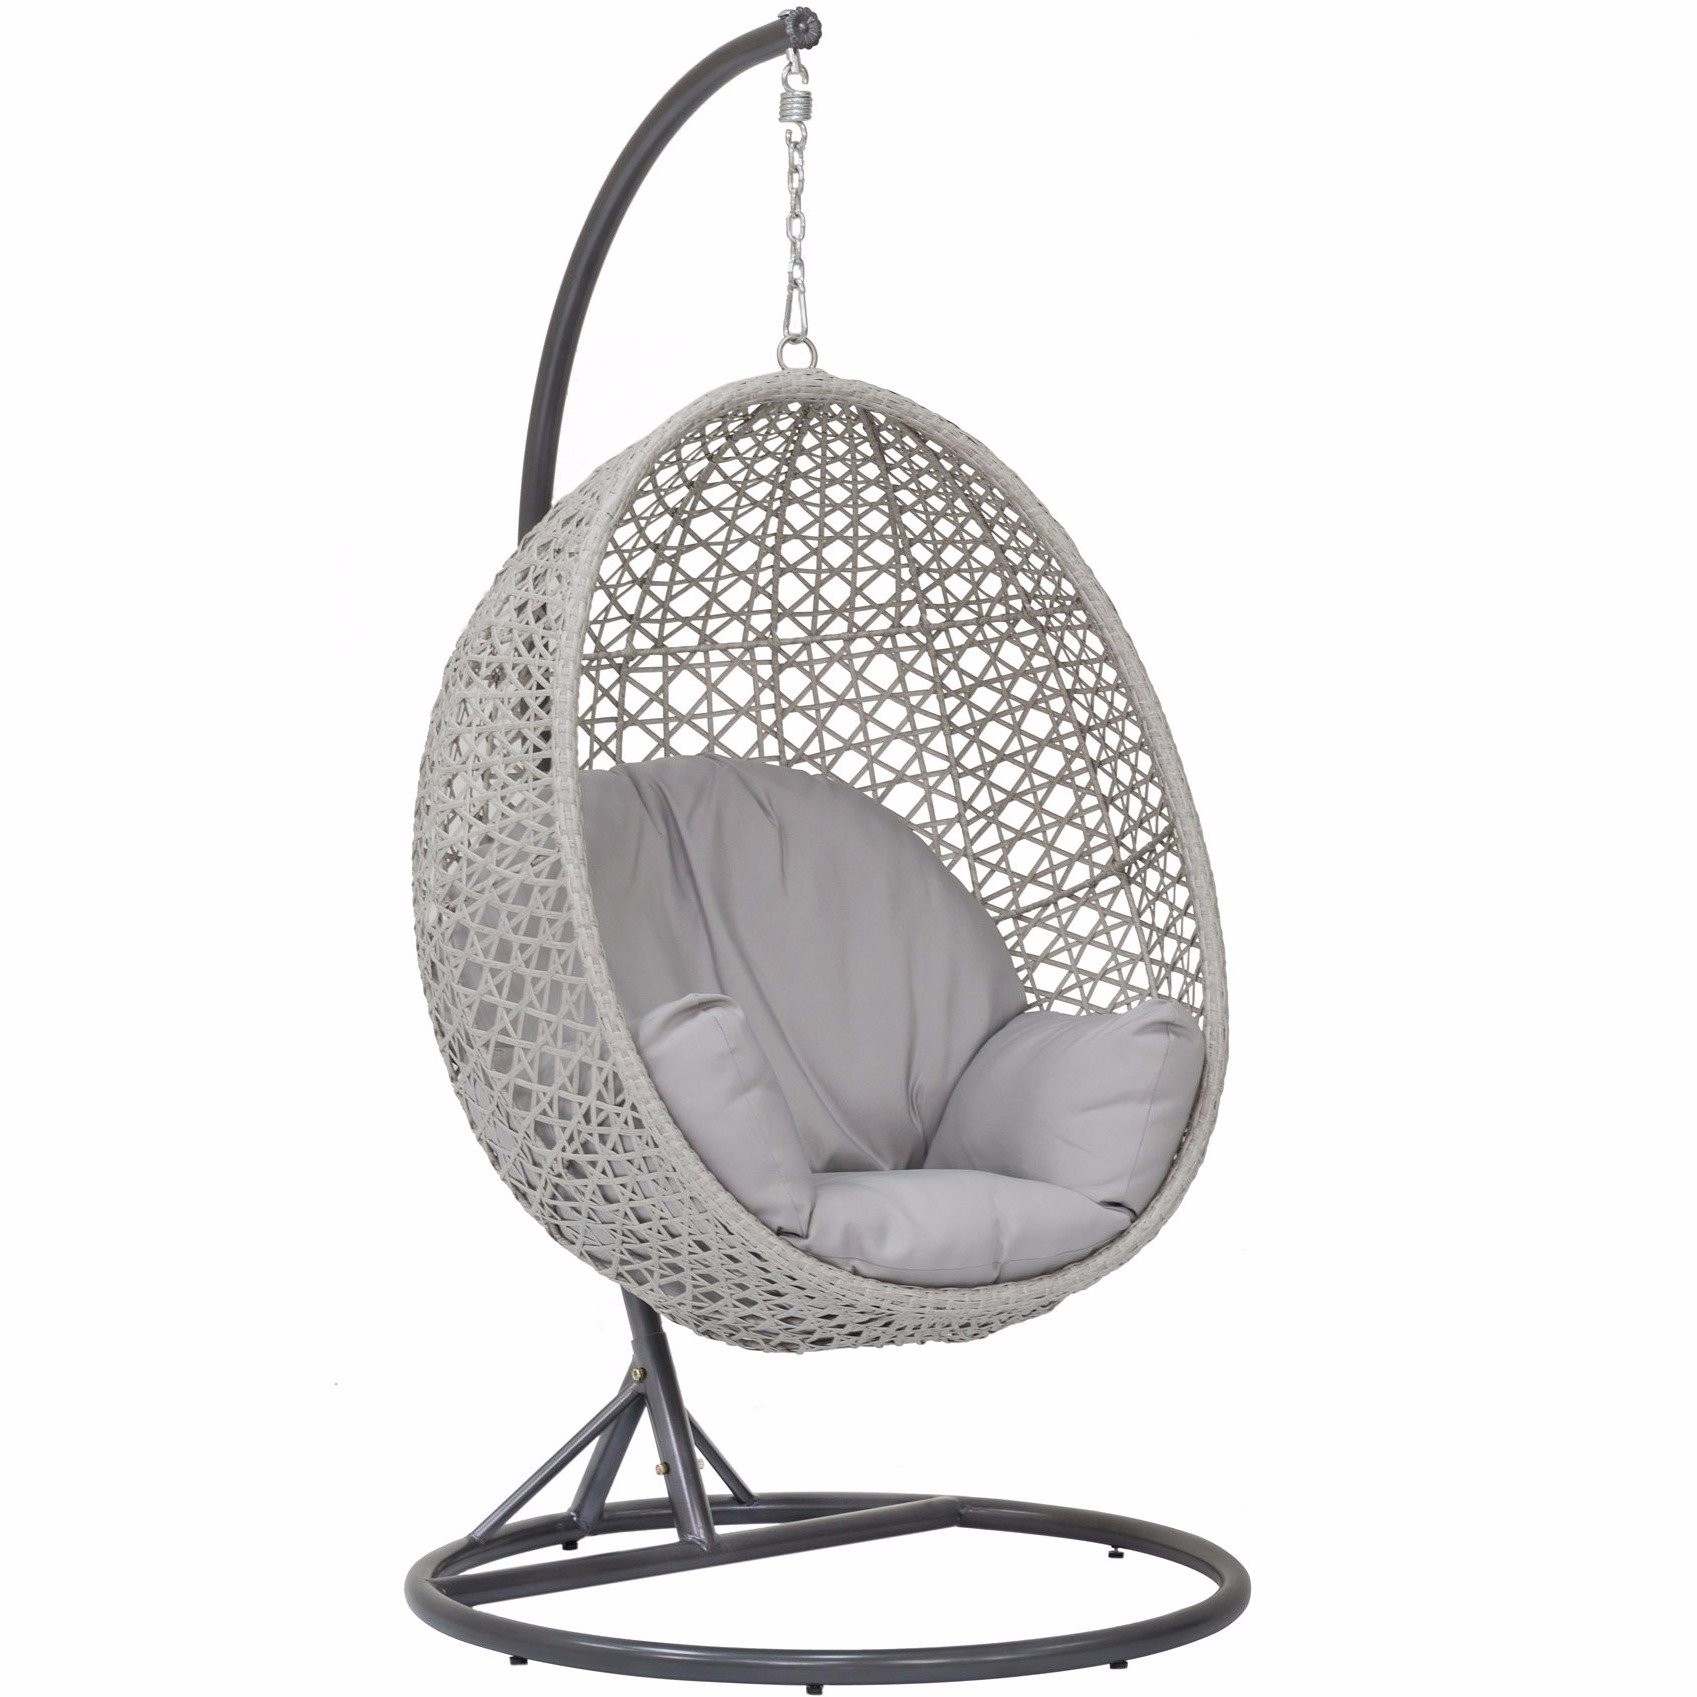 Rattan POD Hanging Egg Swing Chair